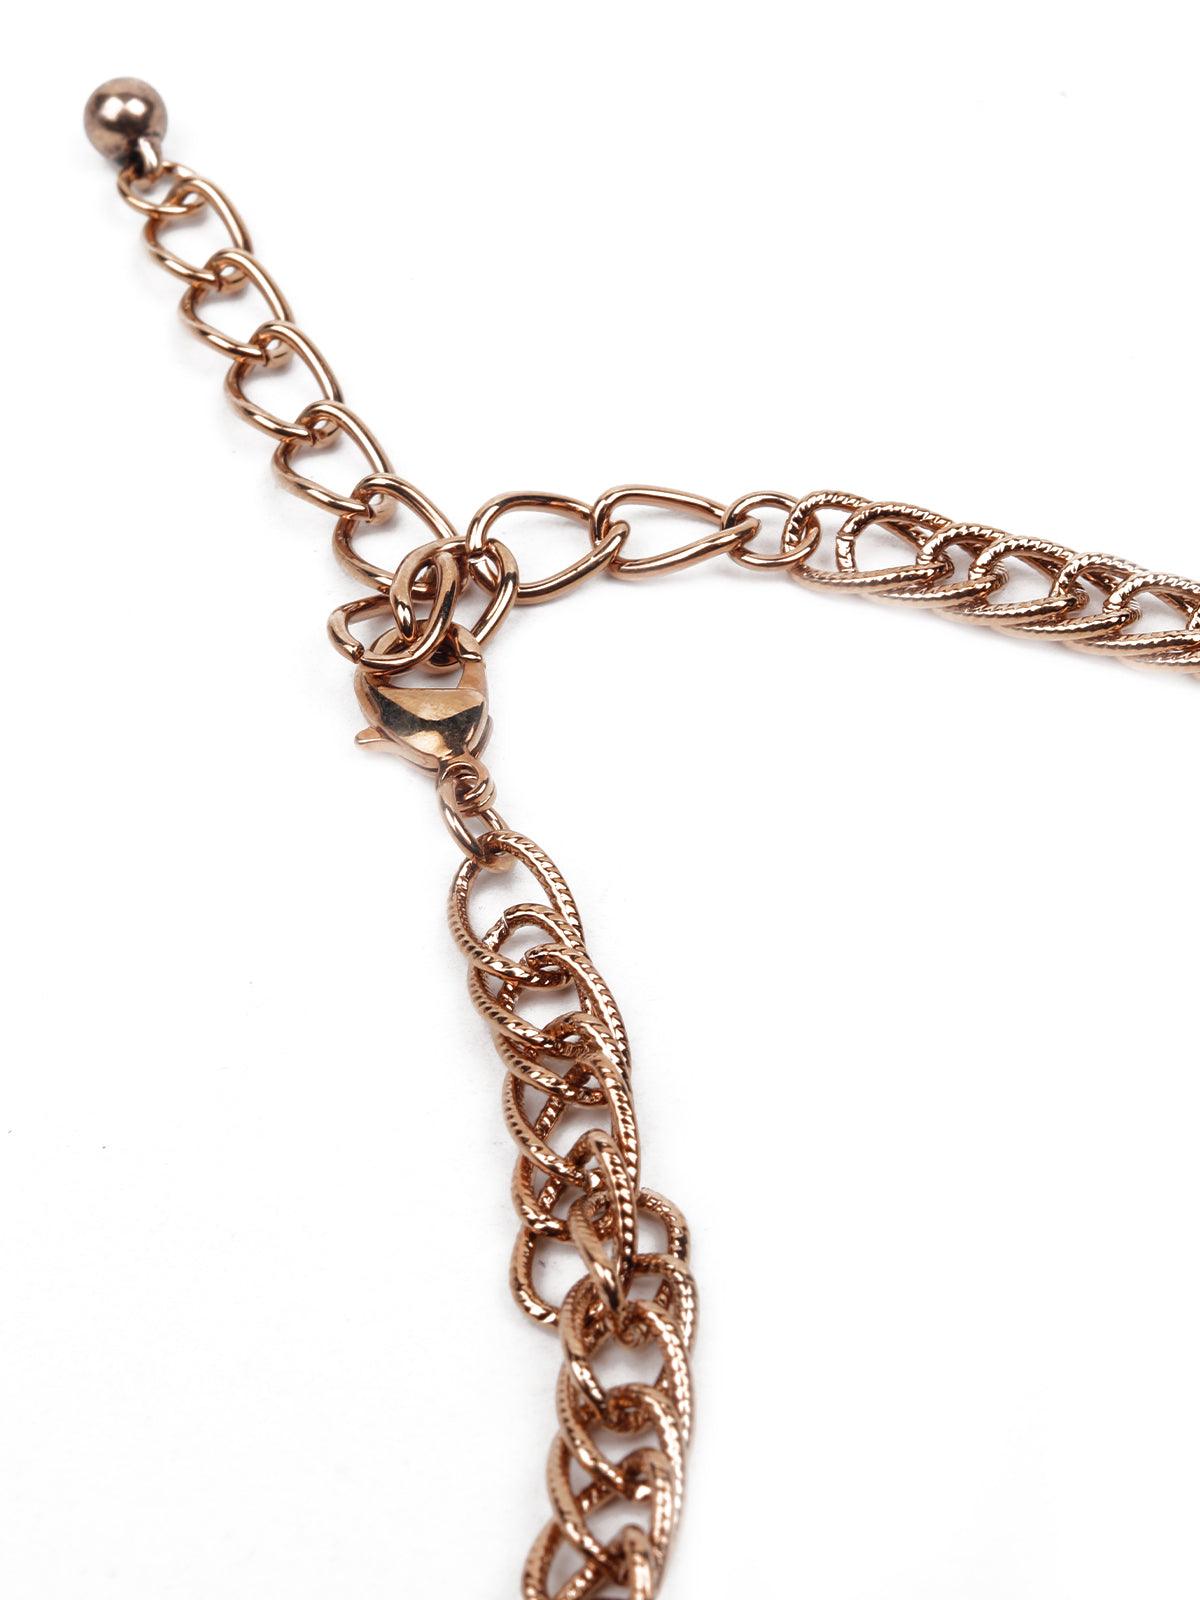 Women's Gold-Tone Embellished Statement Necklace - Odette